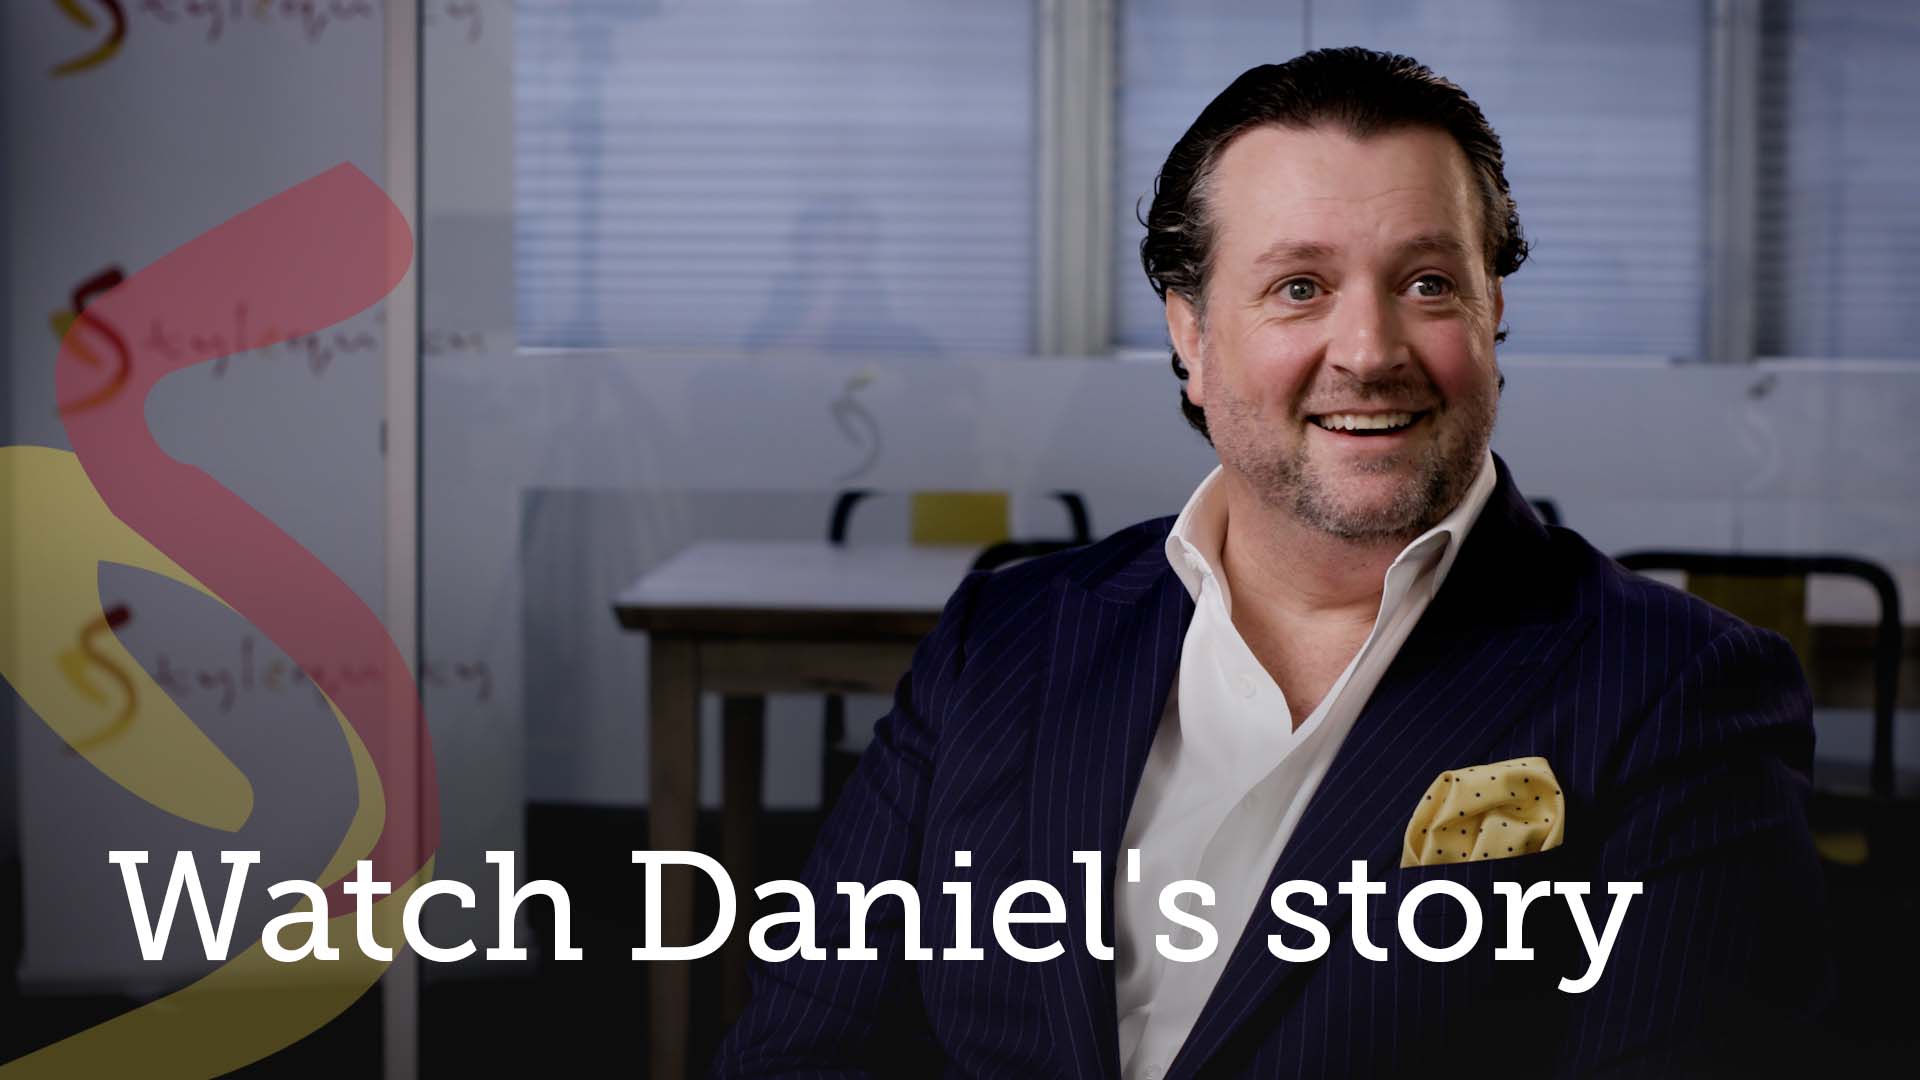 Watch Daniel's story